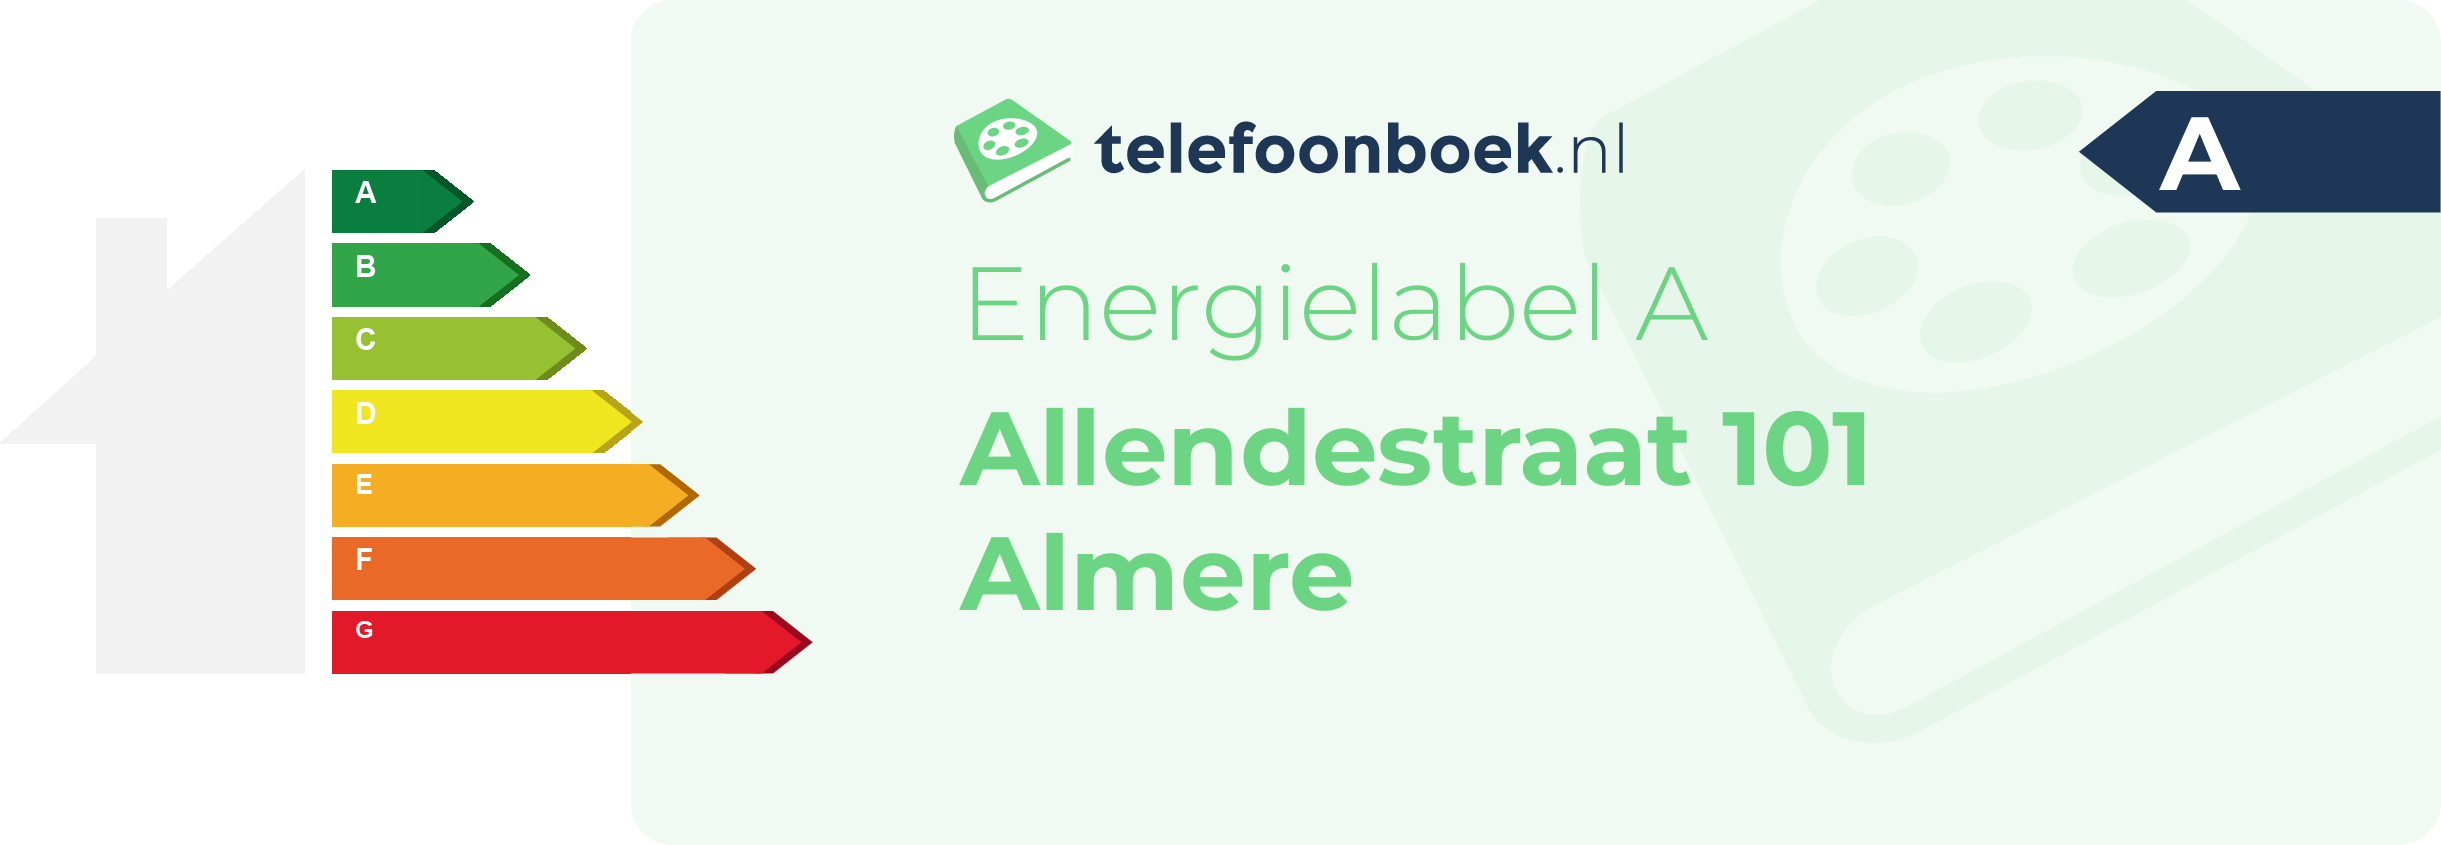 Energielabel Allendestraat 101 Almere